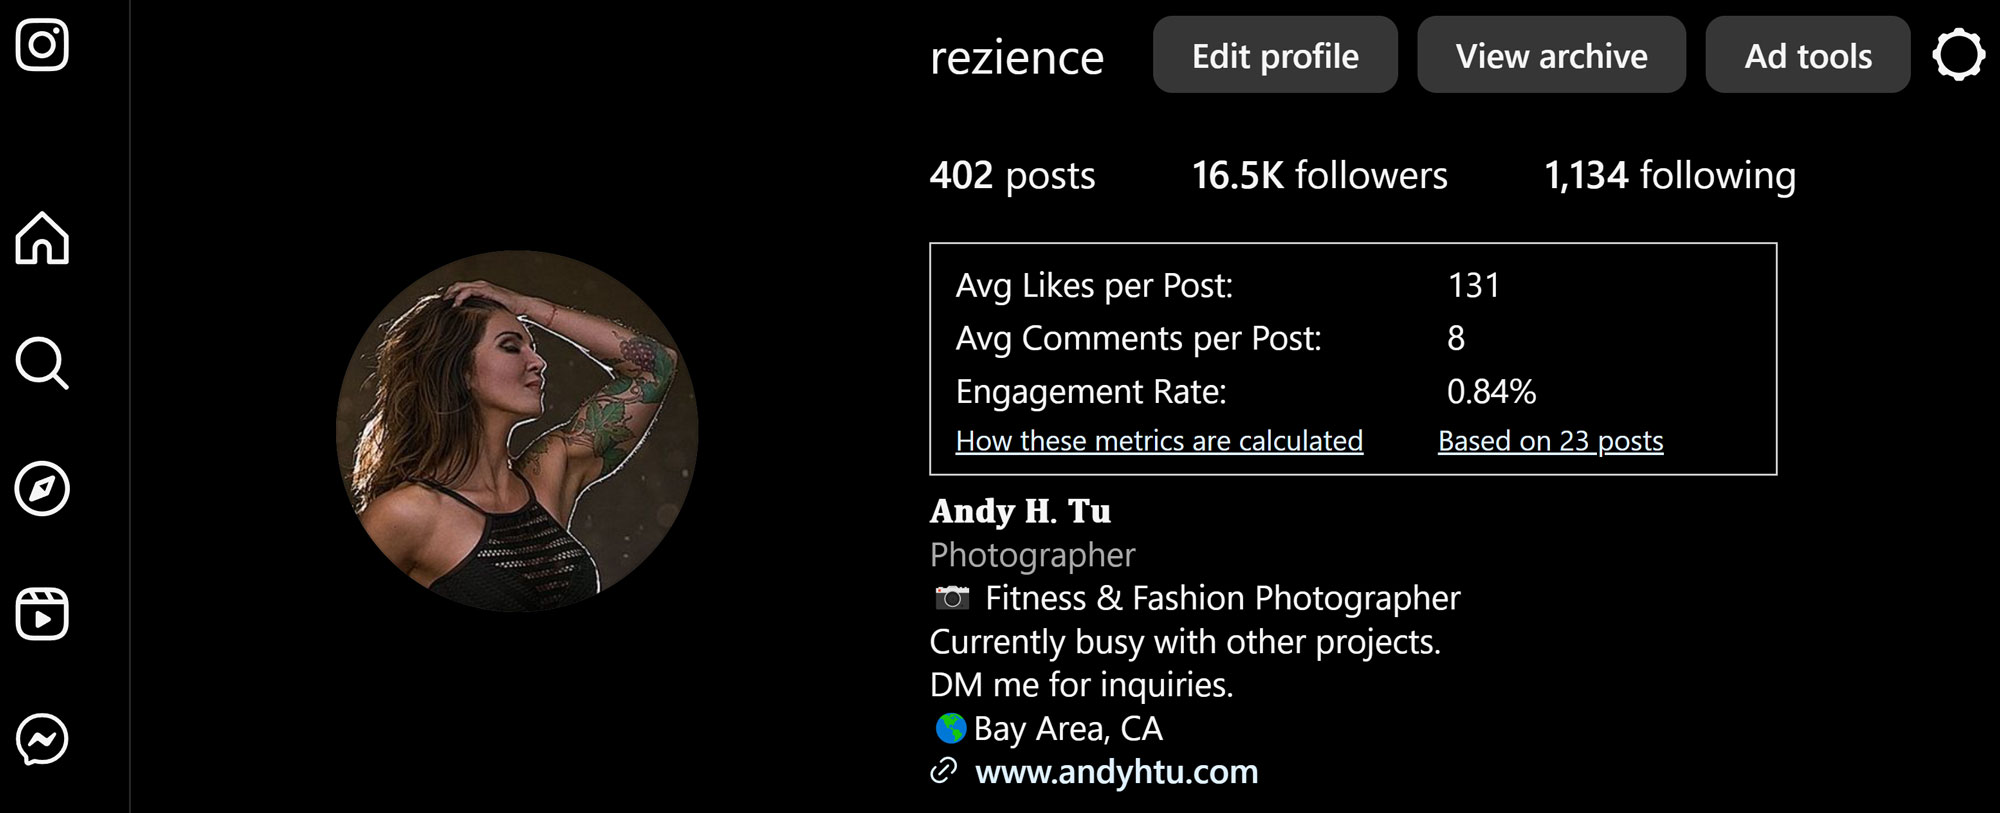 Rezience Instagram Profile dark mode